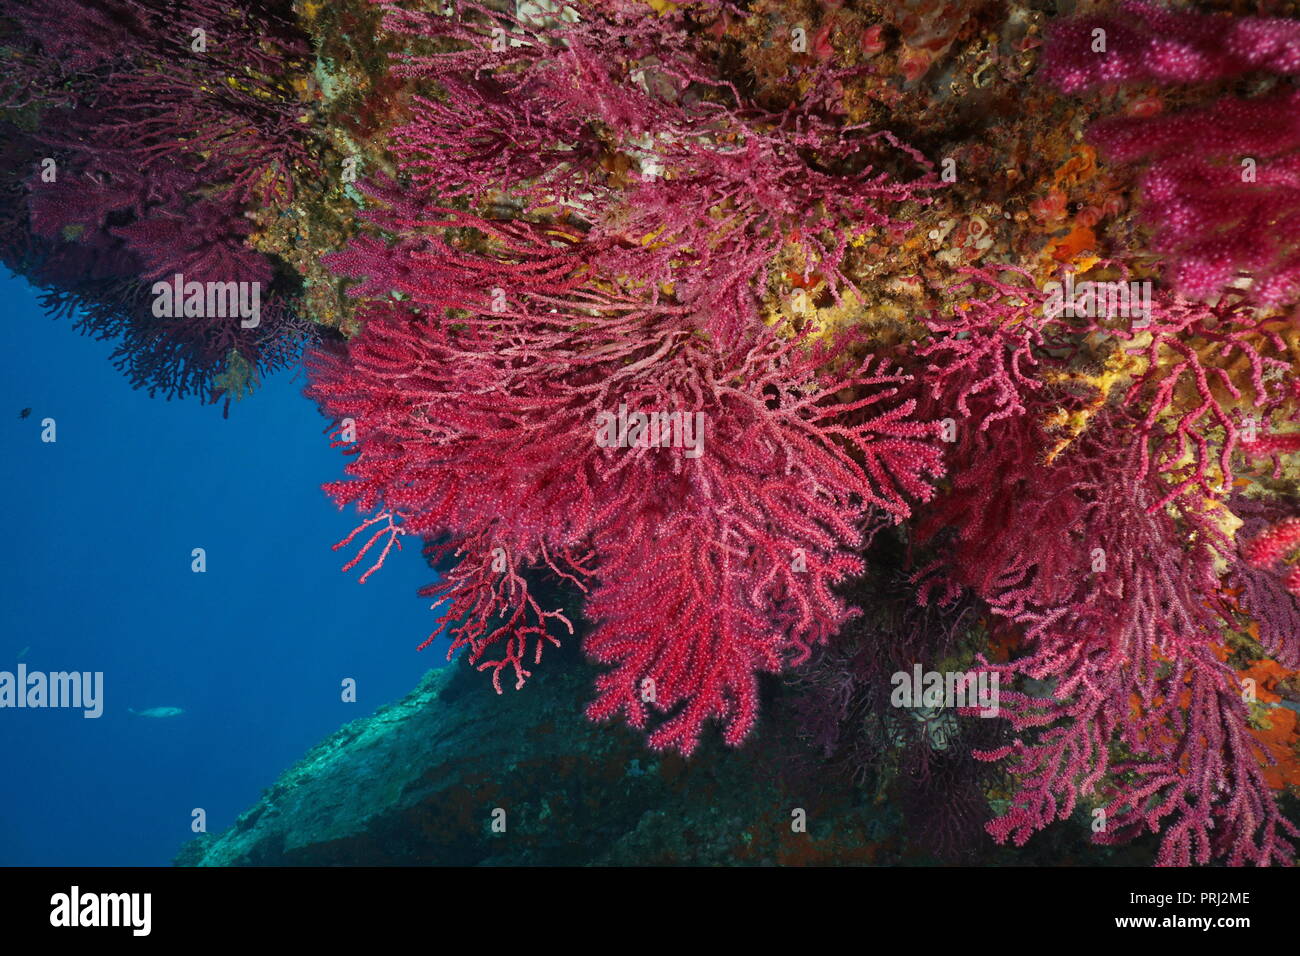 Gorgonian soft coral Paramuricea clavata underwater in the Mediterranean sea, Cap de Creus, Costa Brava, Spain Stock Photo